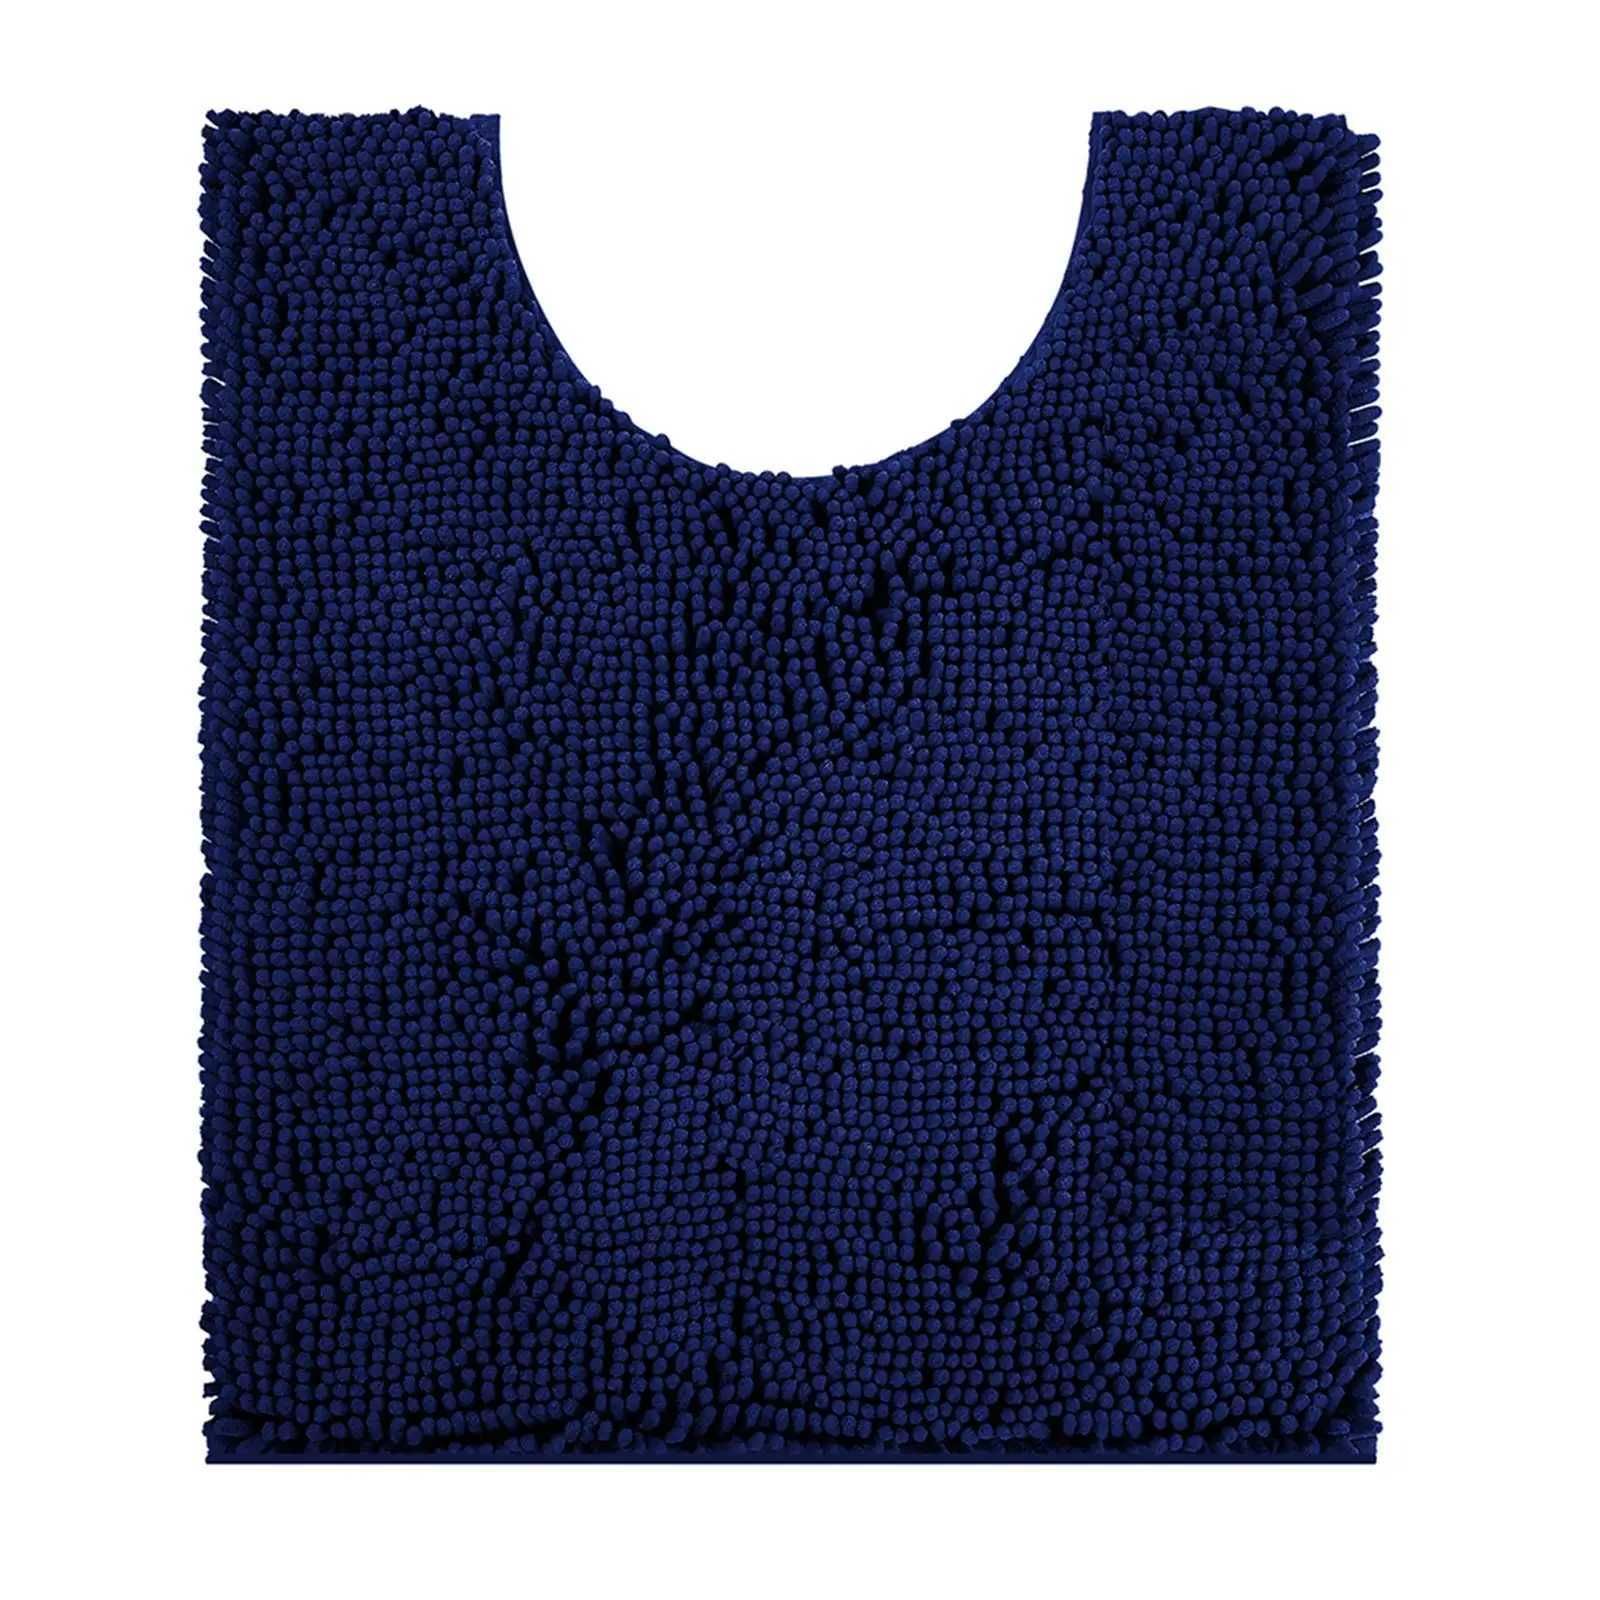 Azul marinho-51x61cm(20x24 polegadas)